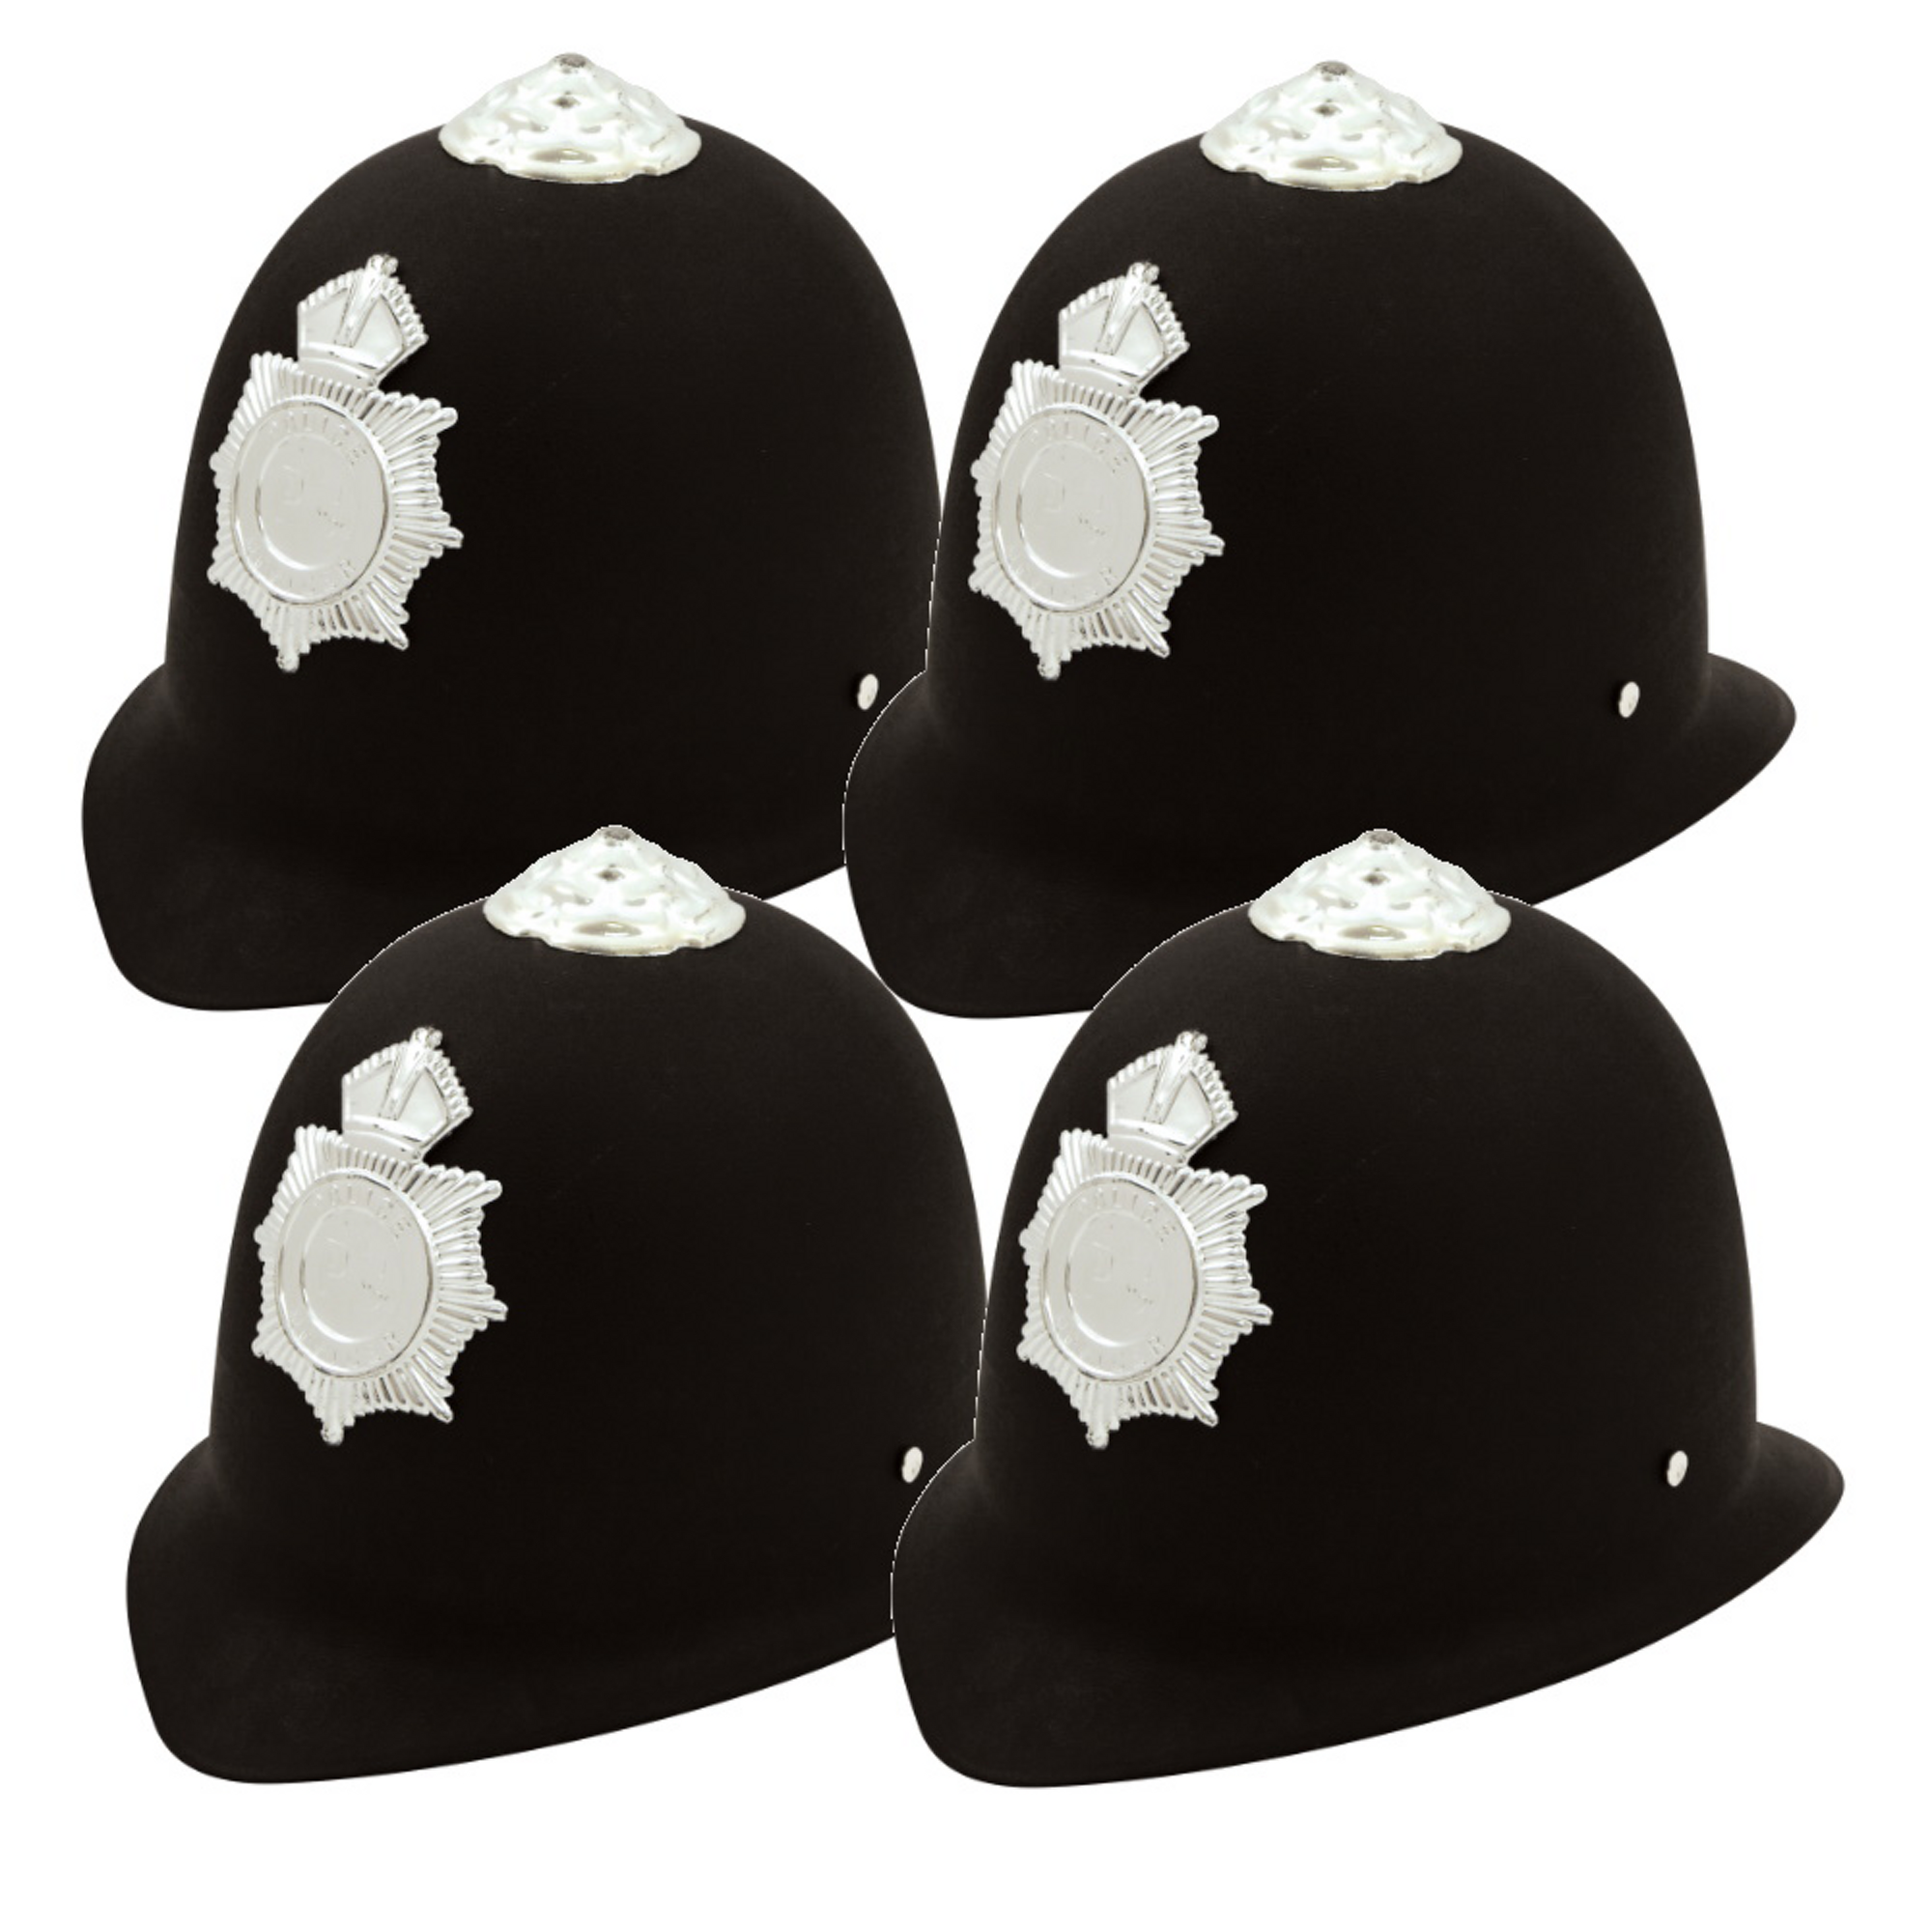 Police Helmet Pk4